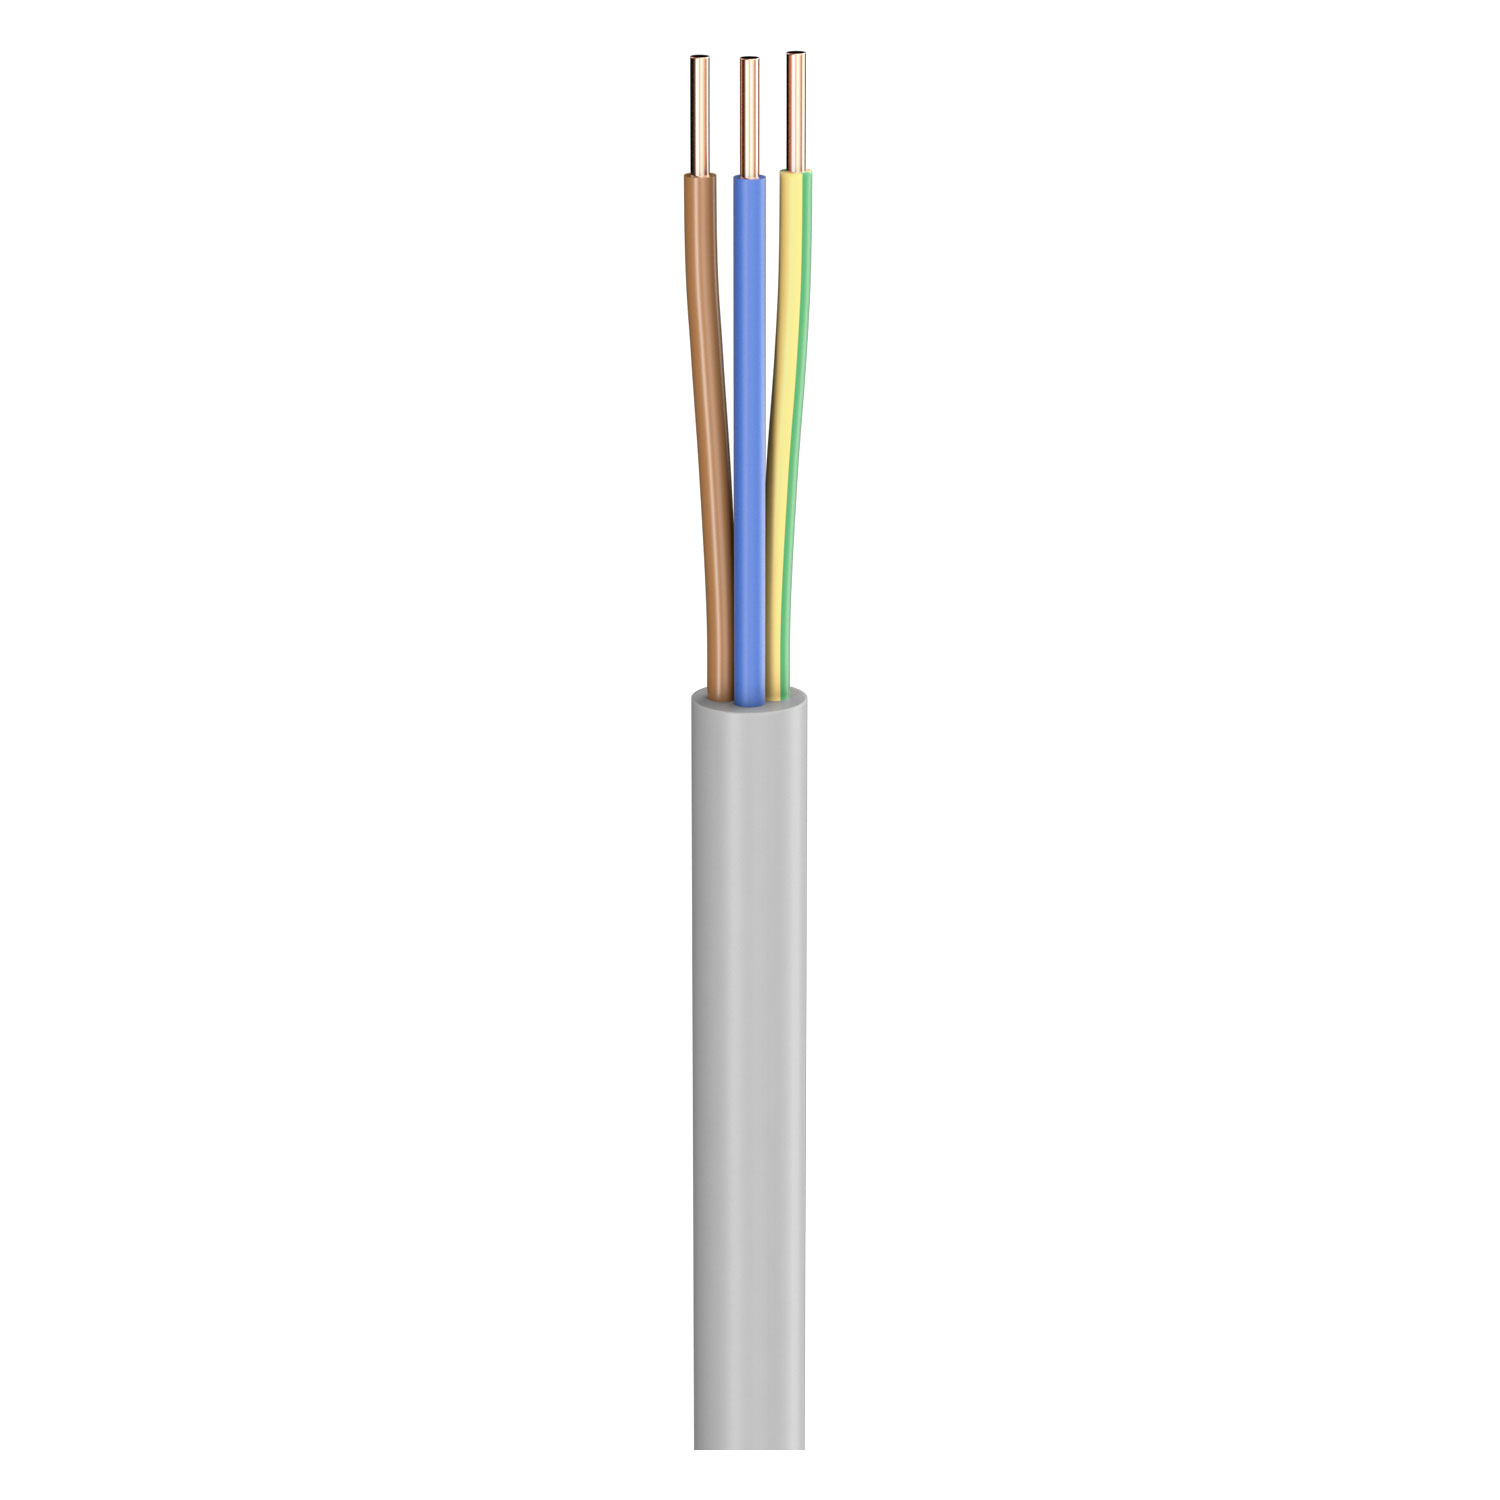 Power Lead NYM-J; 3 x 2,50 mm²; PVC, flame-retardant, Ø 9,70 mm; grey; Eca